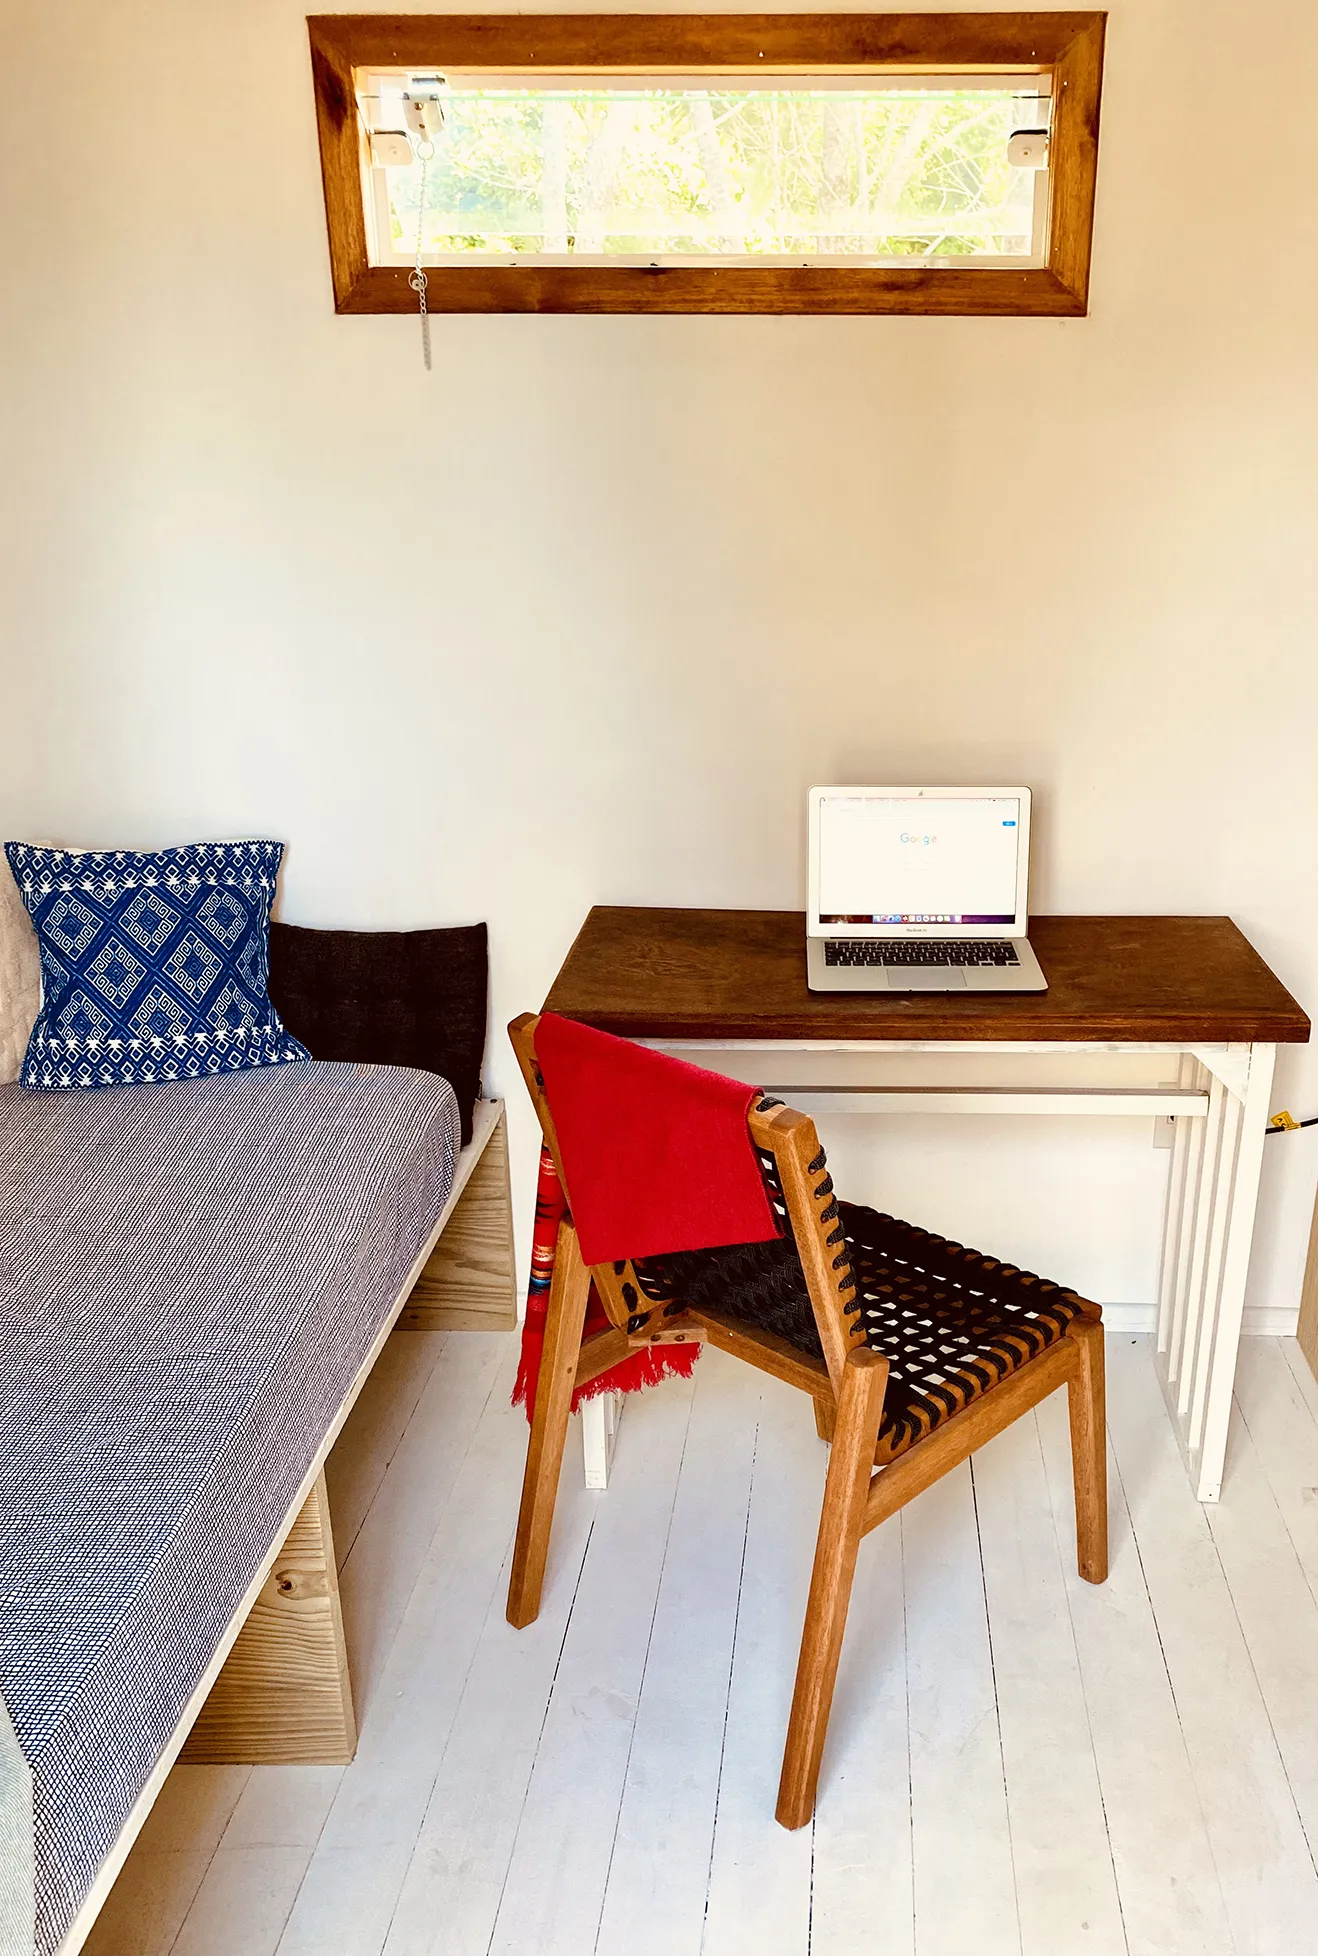 Home Office Space at Nessa Onda Beach House